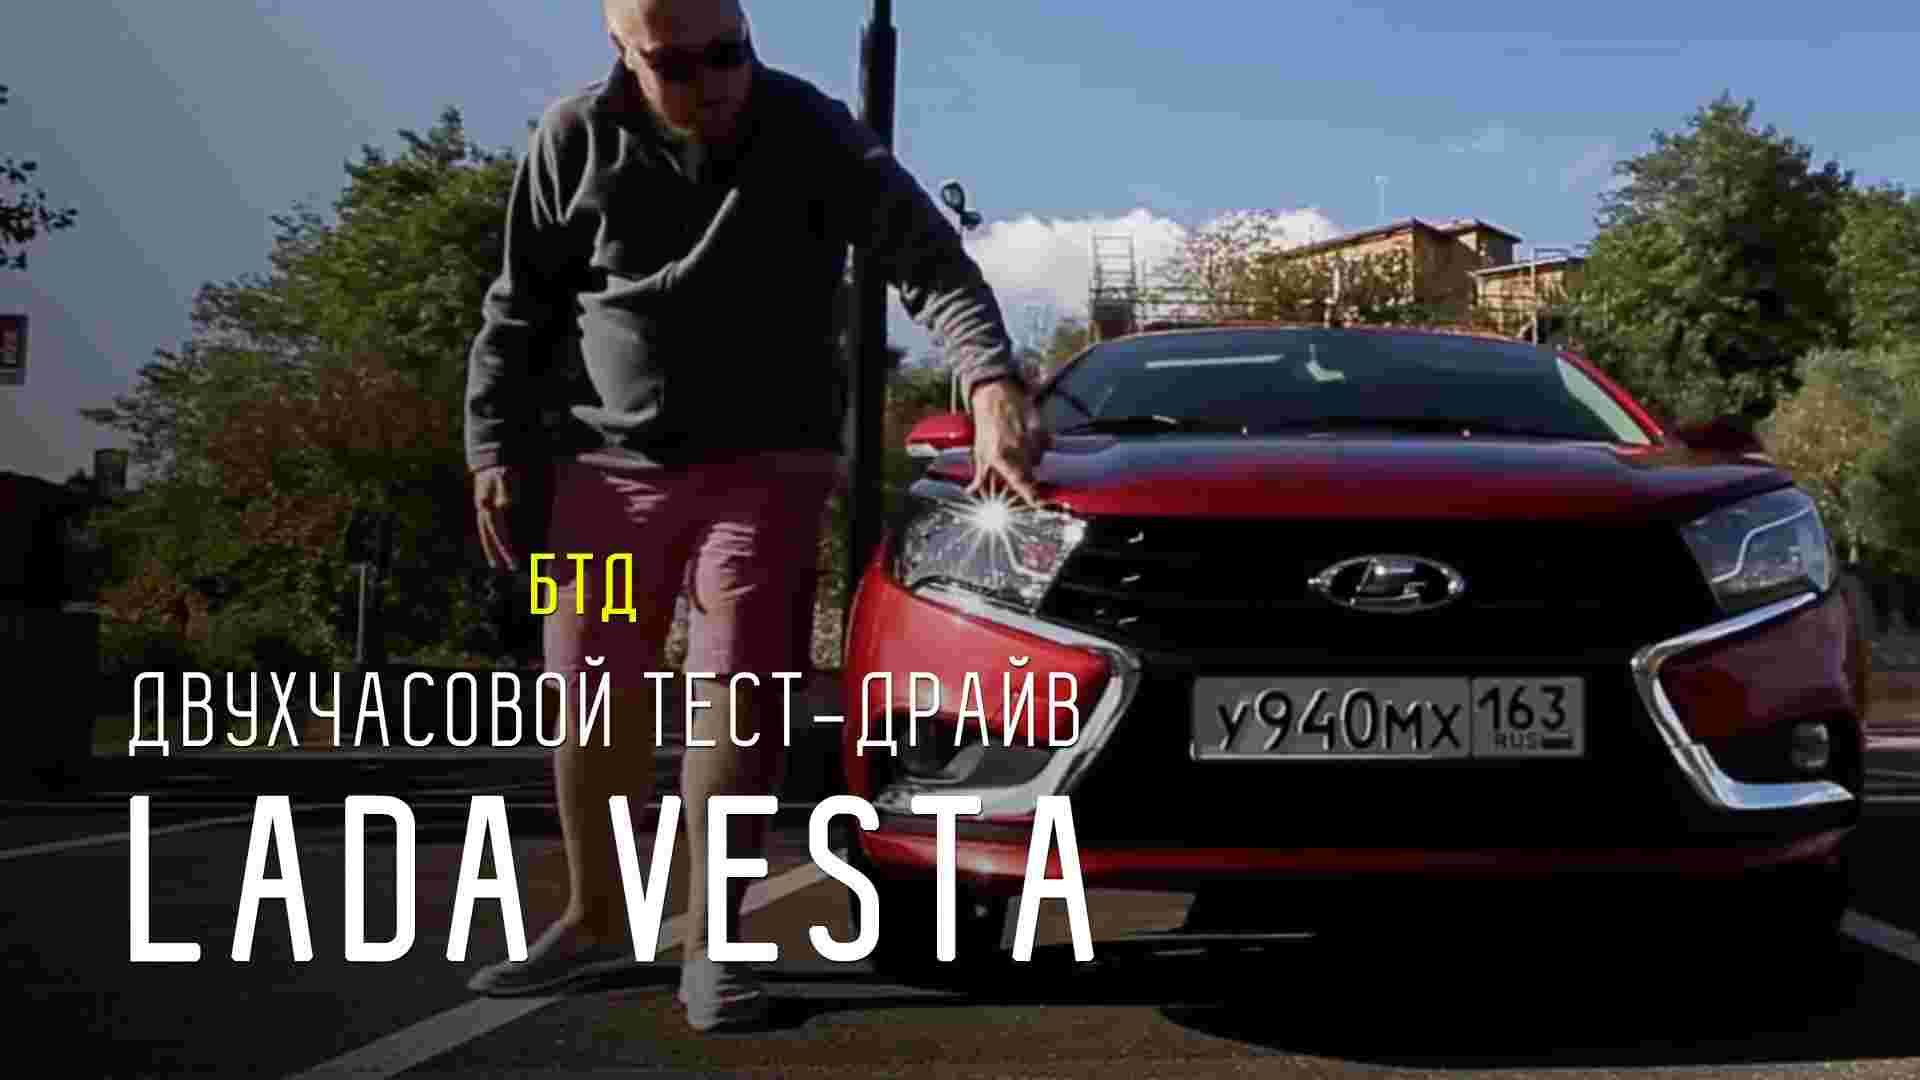 Lada Vesta - Большой тест-драйв (видеоверсия) / Big Test Drive